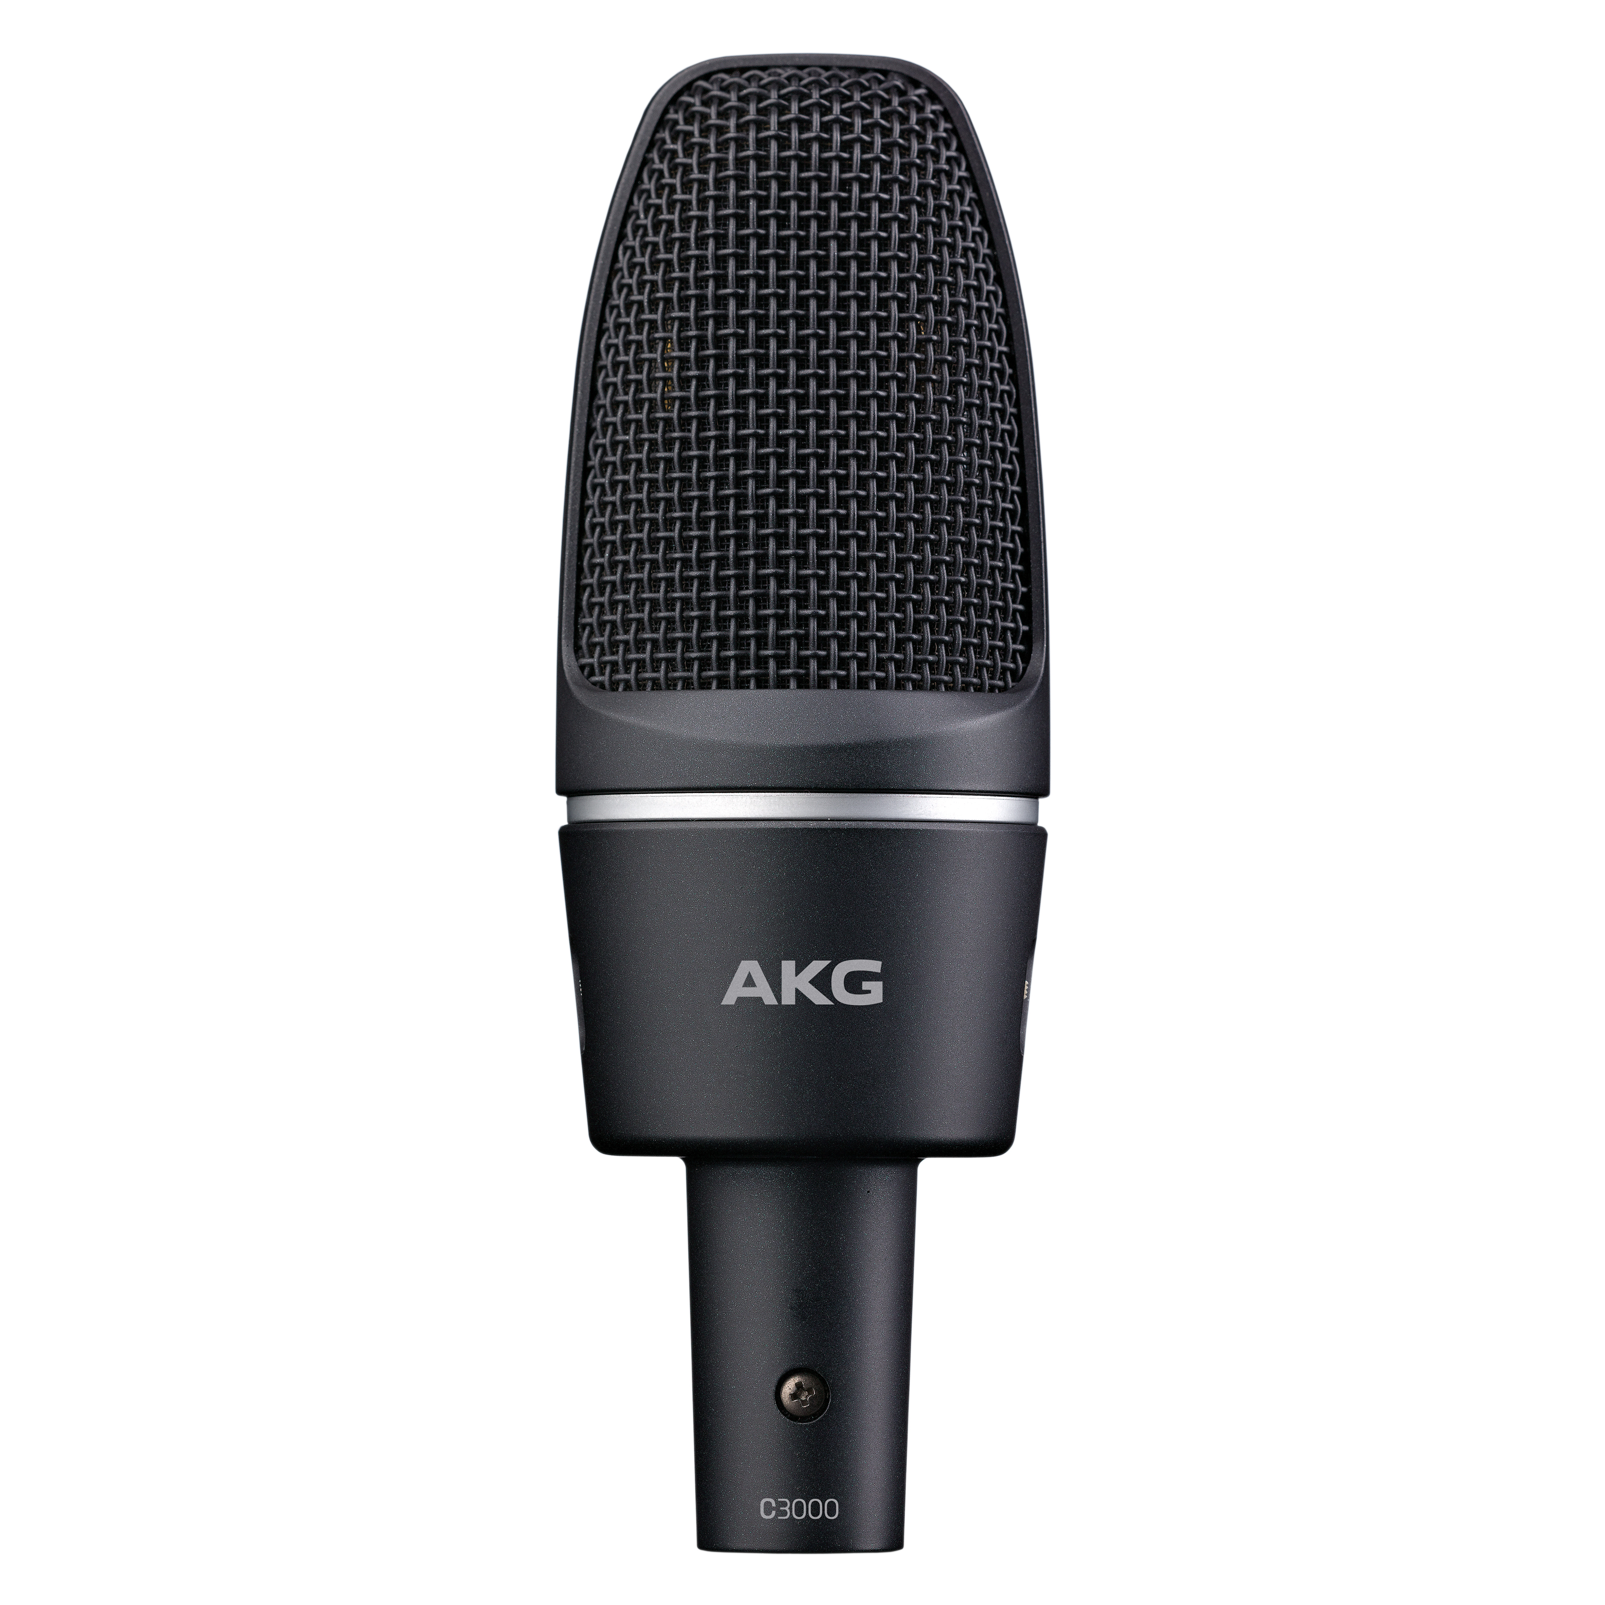 C3000 | High-performance large-diaphragm condenser microphone